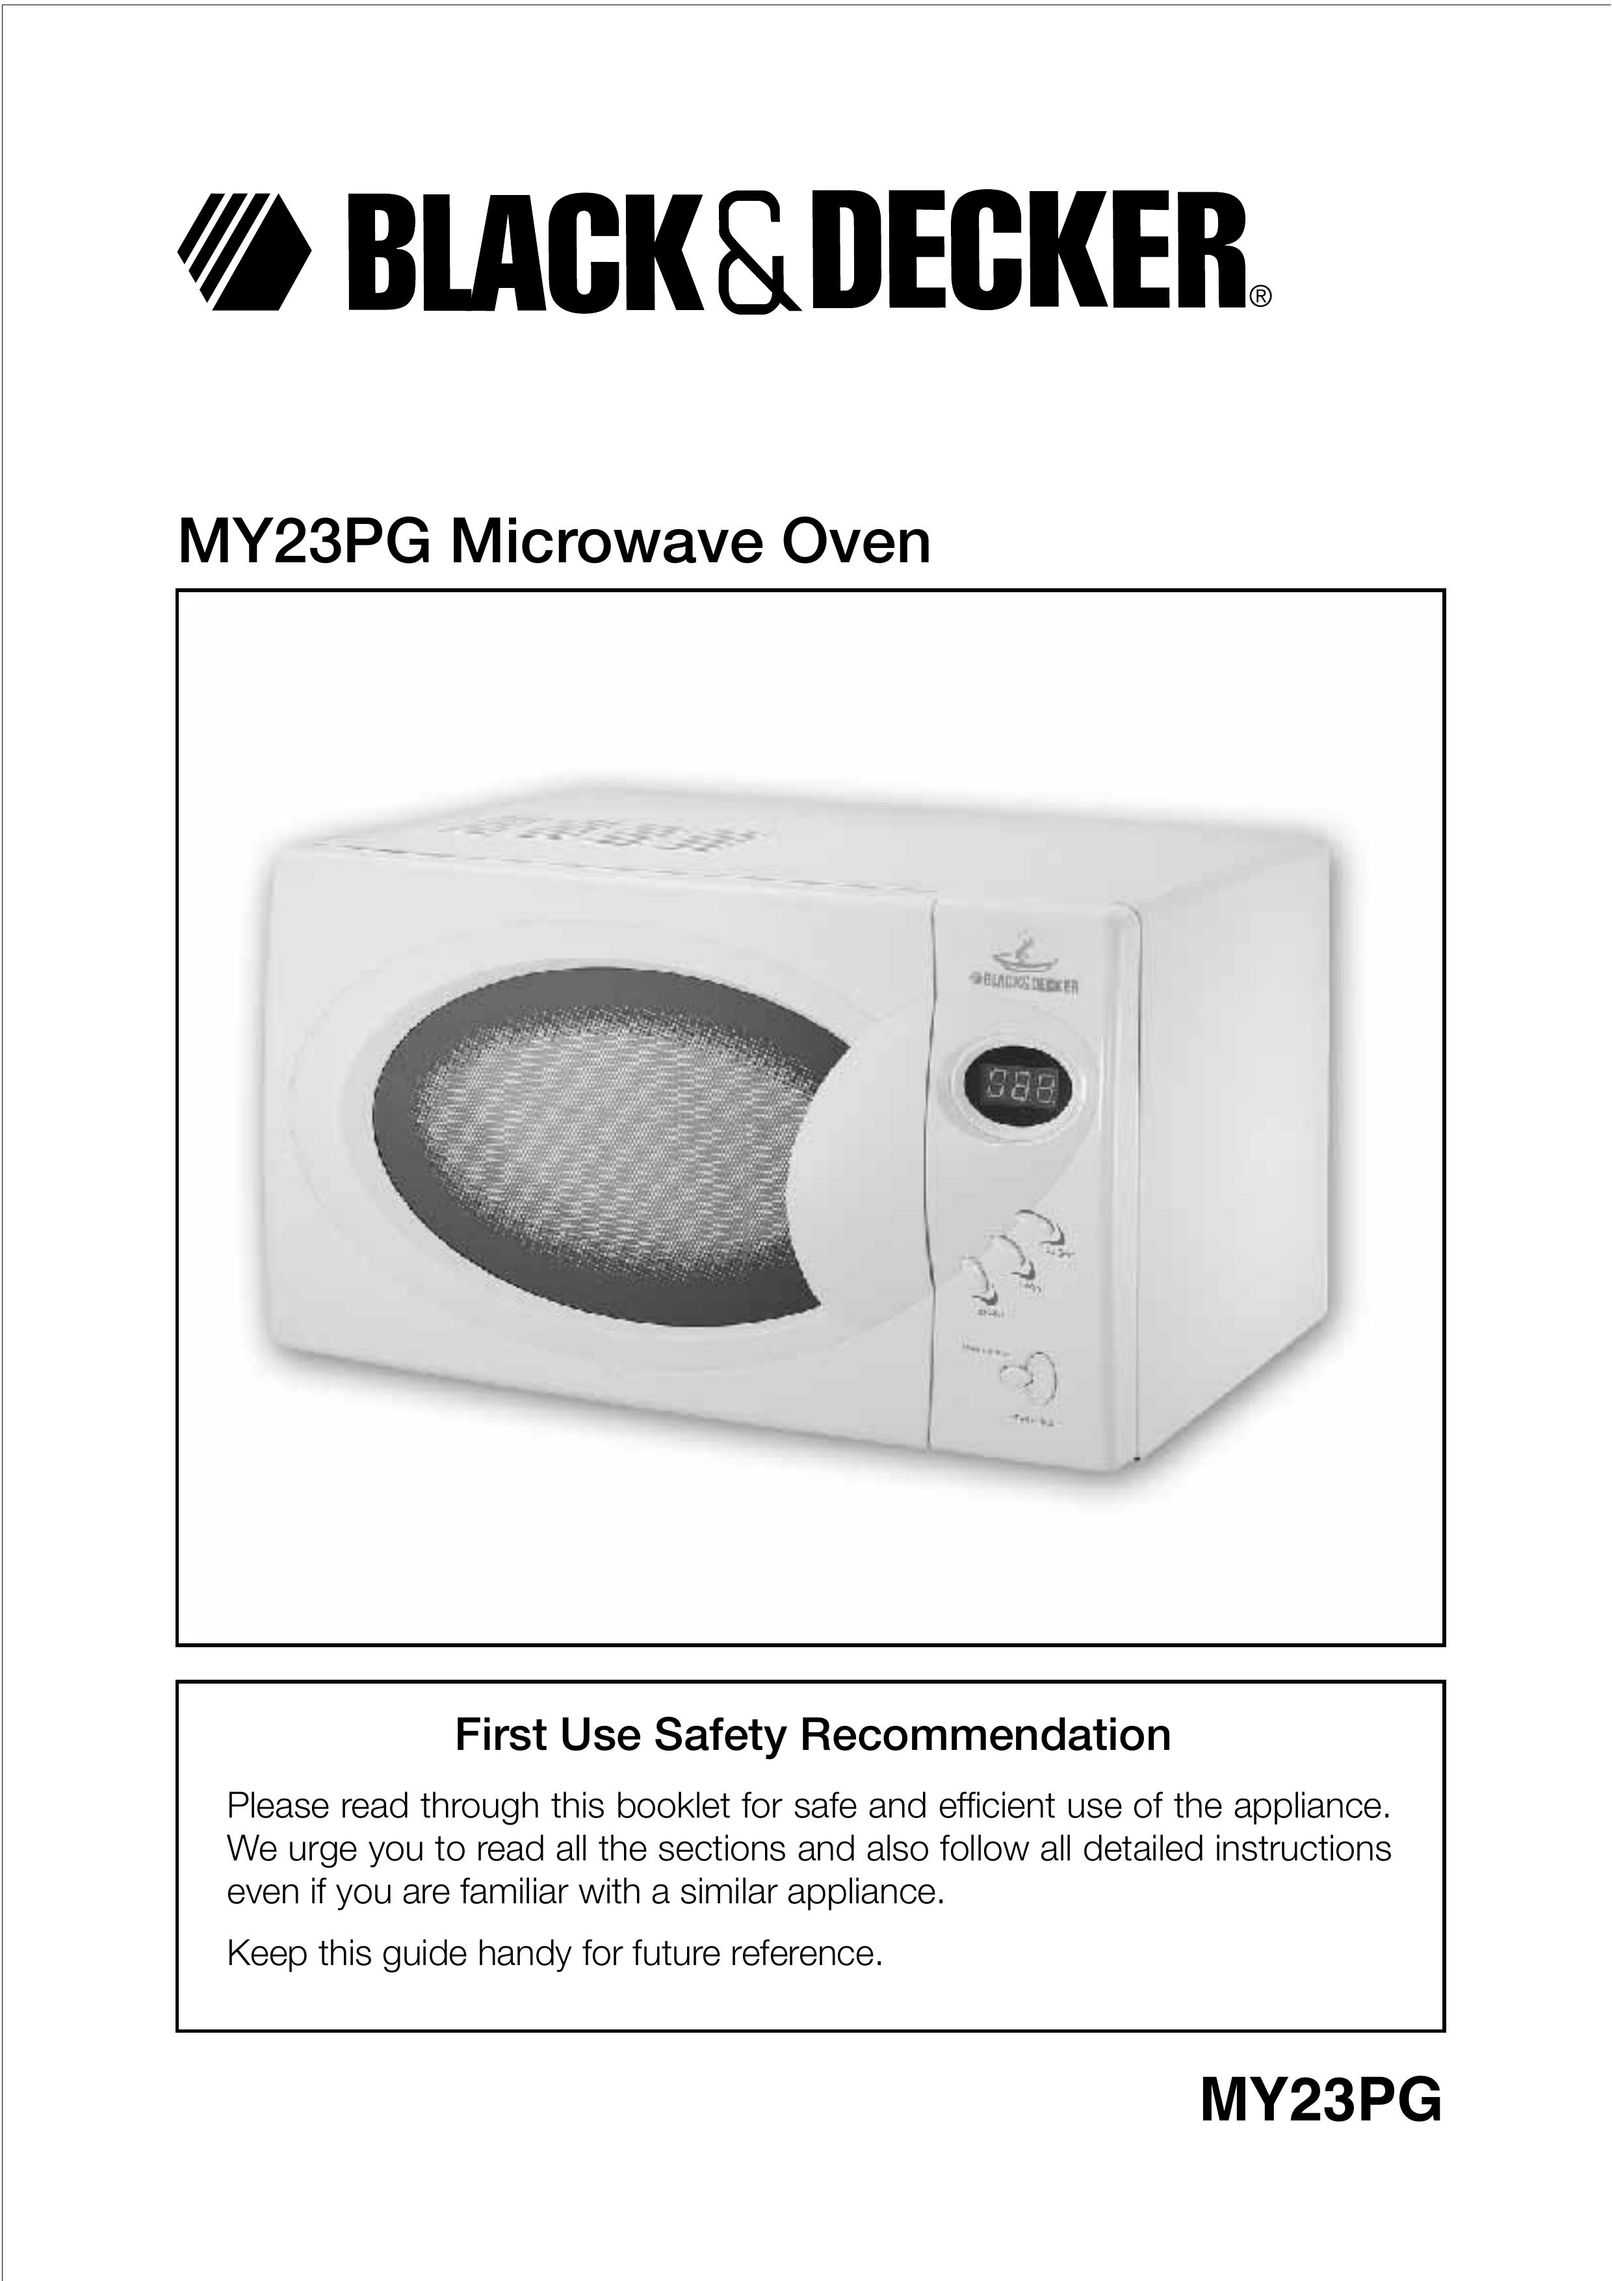 Black & Decker MY23PG Microwave Oven User Manual